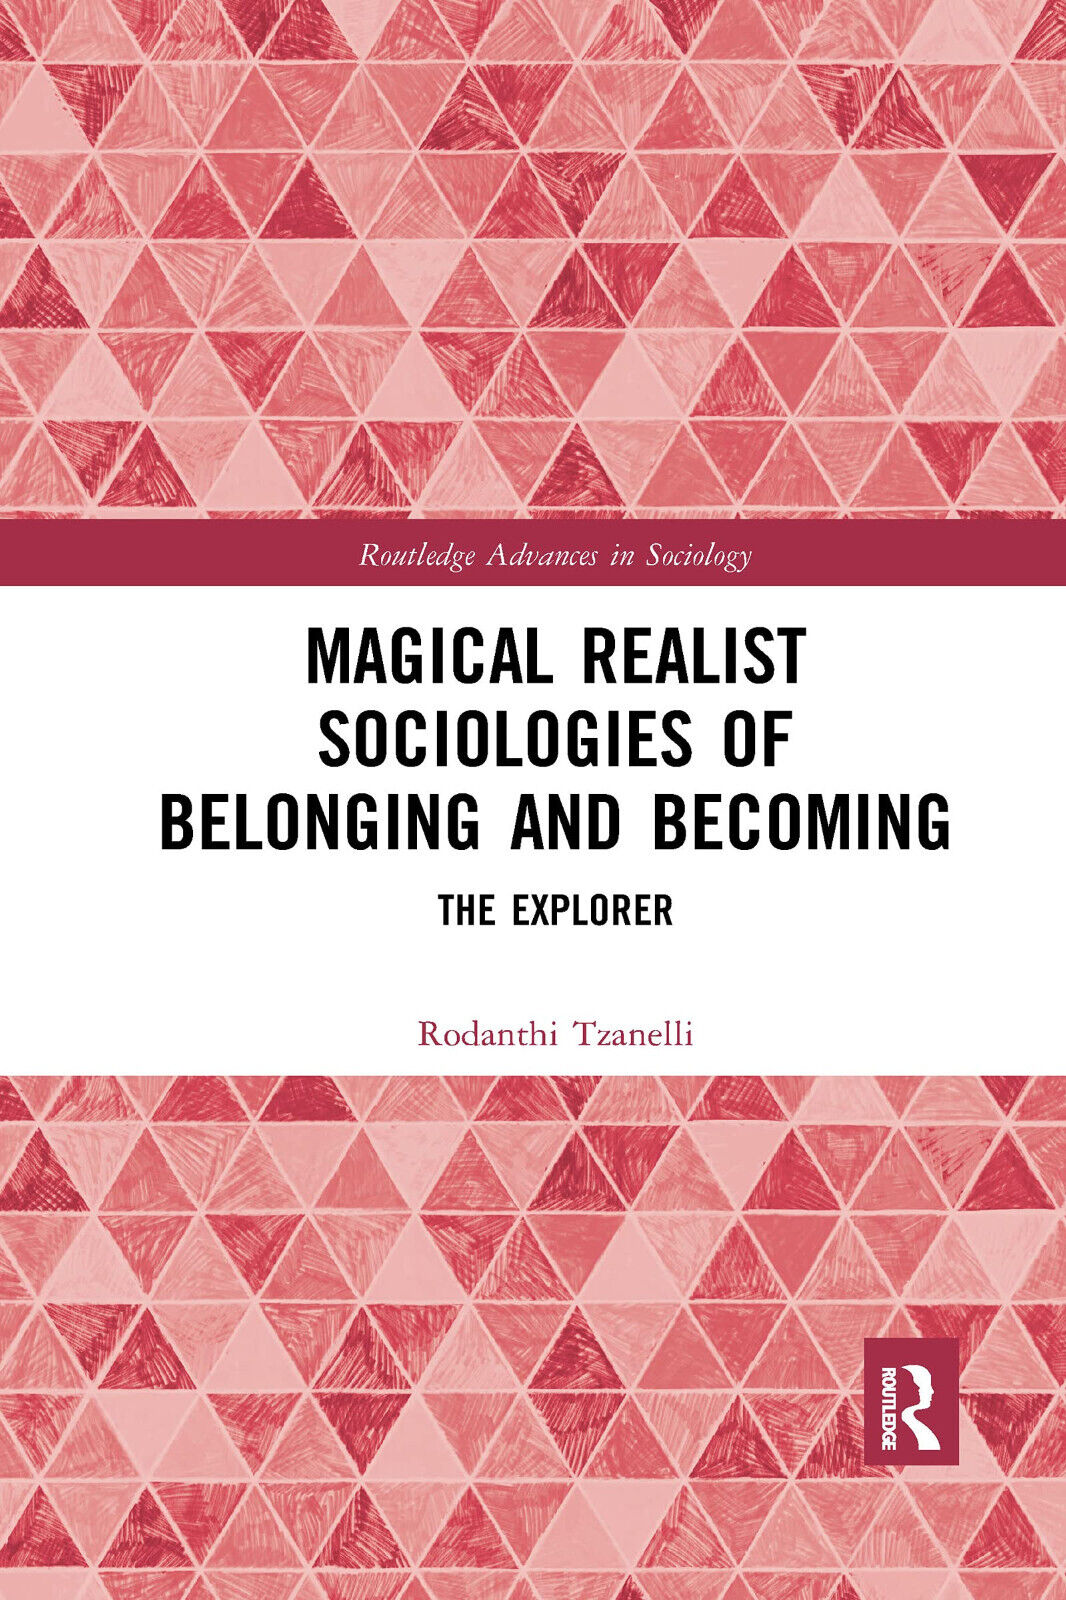 Magical Realist Sociologies Of Belonging And Becoming - Rodanthi Tzanelli - 2021